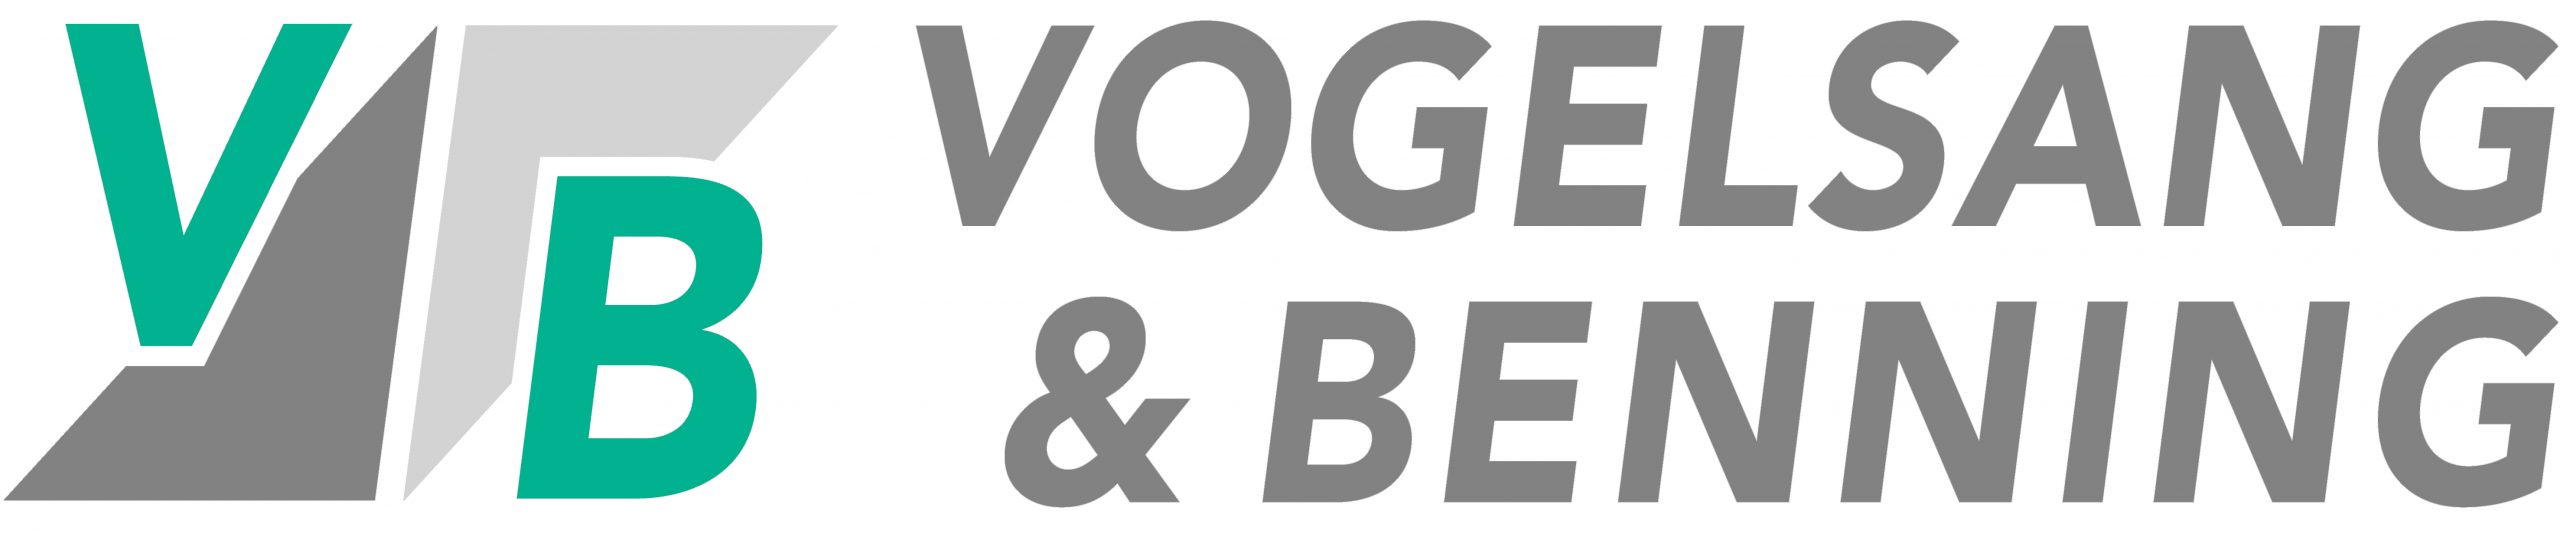 VB-Logo-RGB-scaled-1